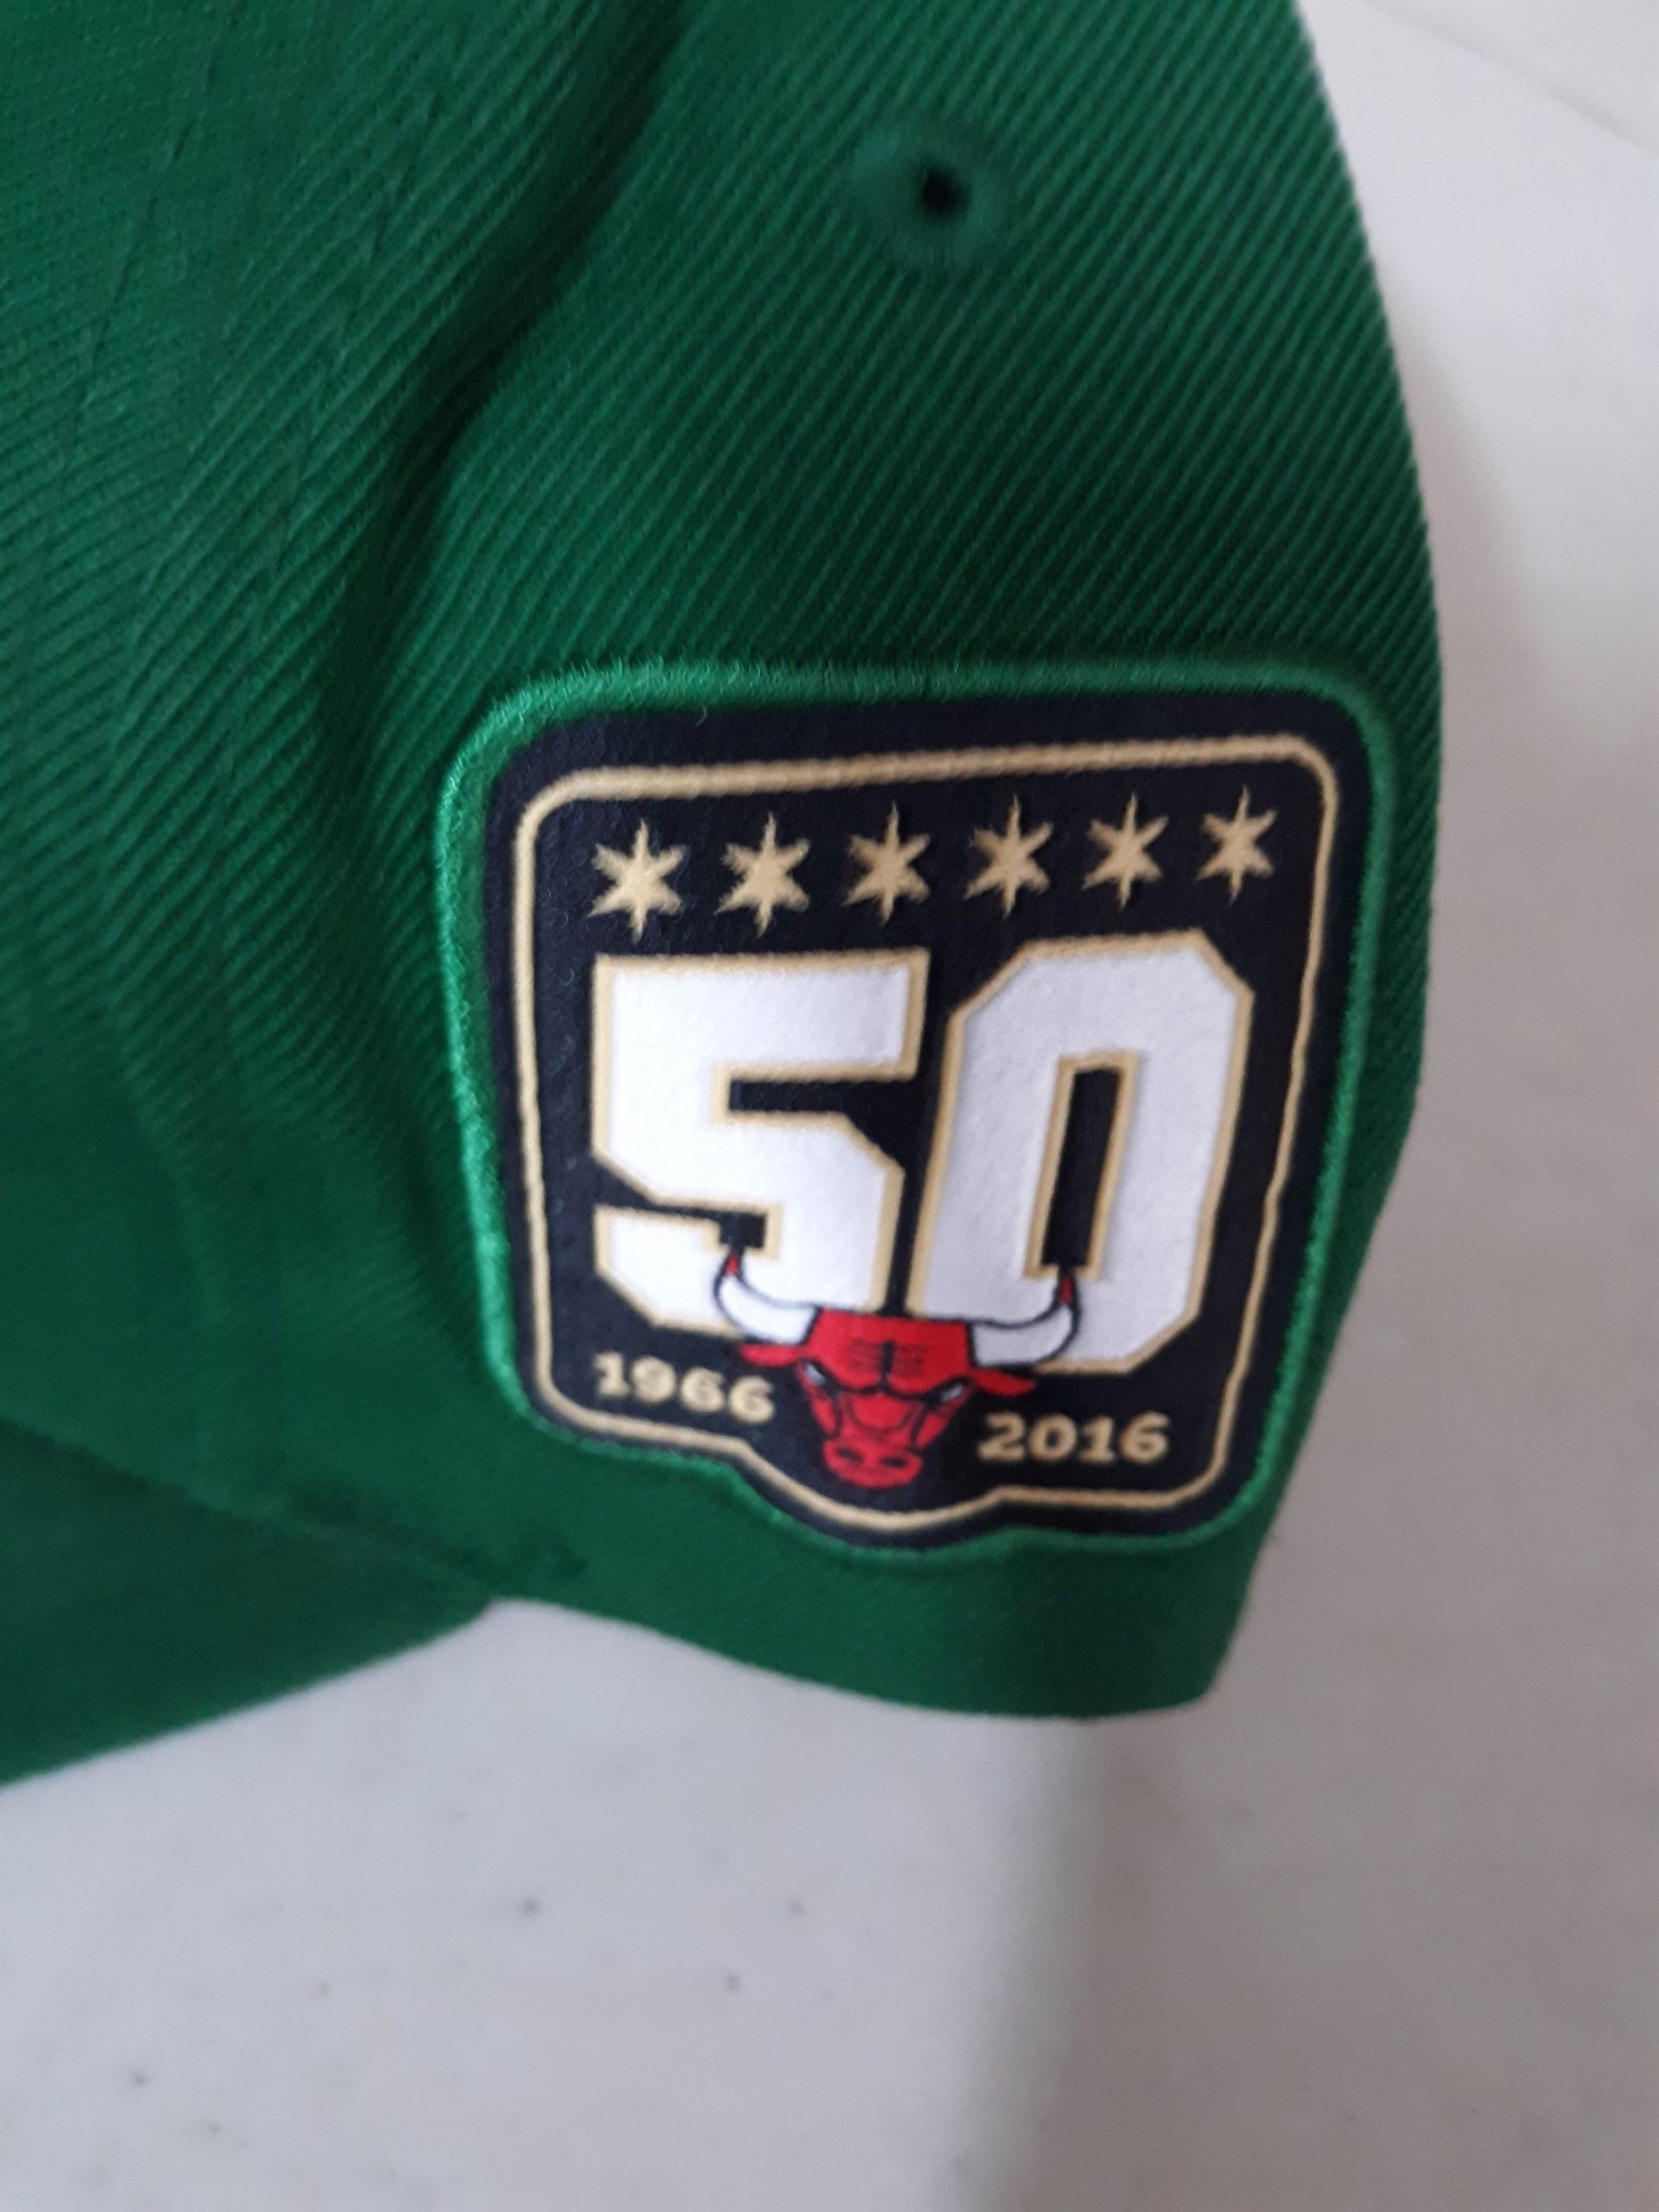 Chicago Bulls Green Adjustable Fit Hat